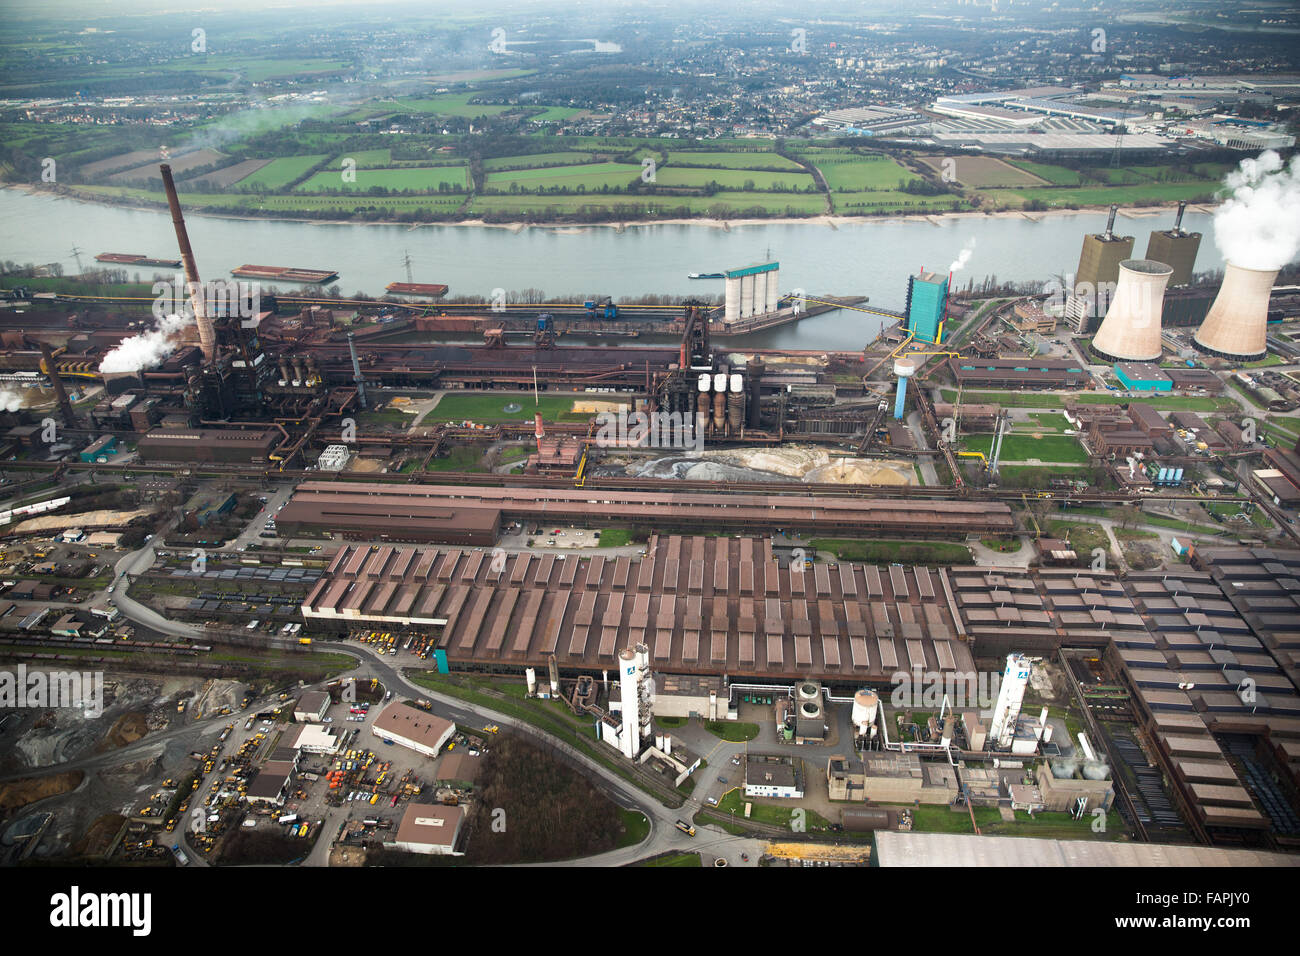 Vista aerea, acciaierie HKM am Rhein, acciaierie Krupp-Mannesmann, Huckingen, comignoli fumanti, coking, paesaggi industriali, Foto Stock